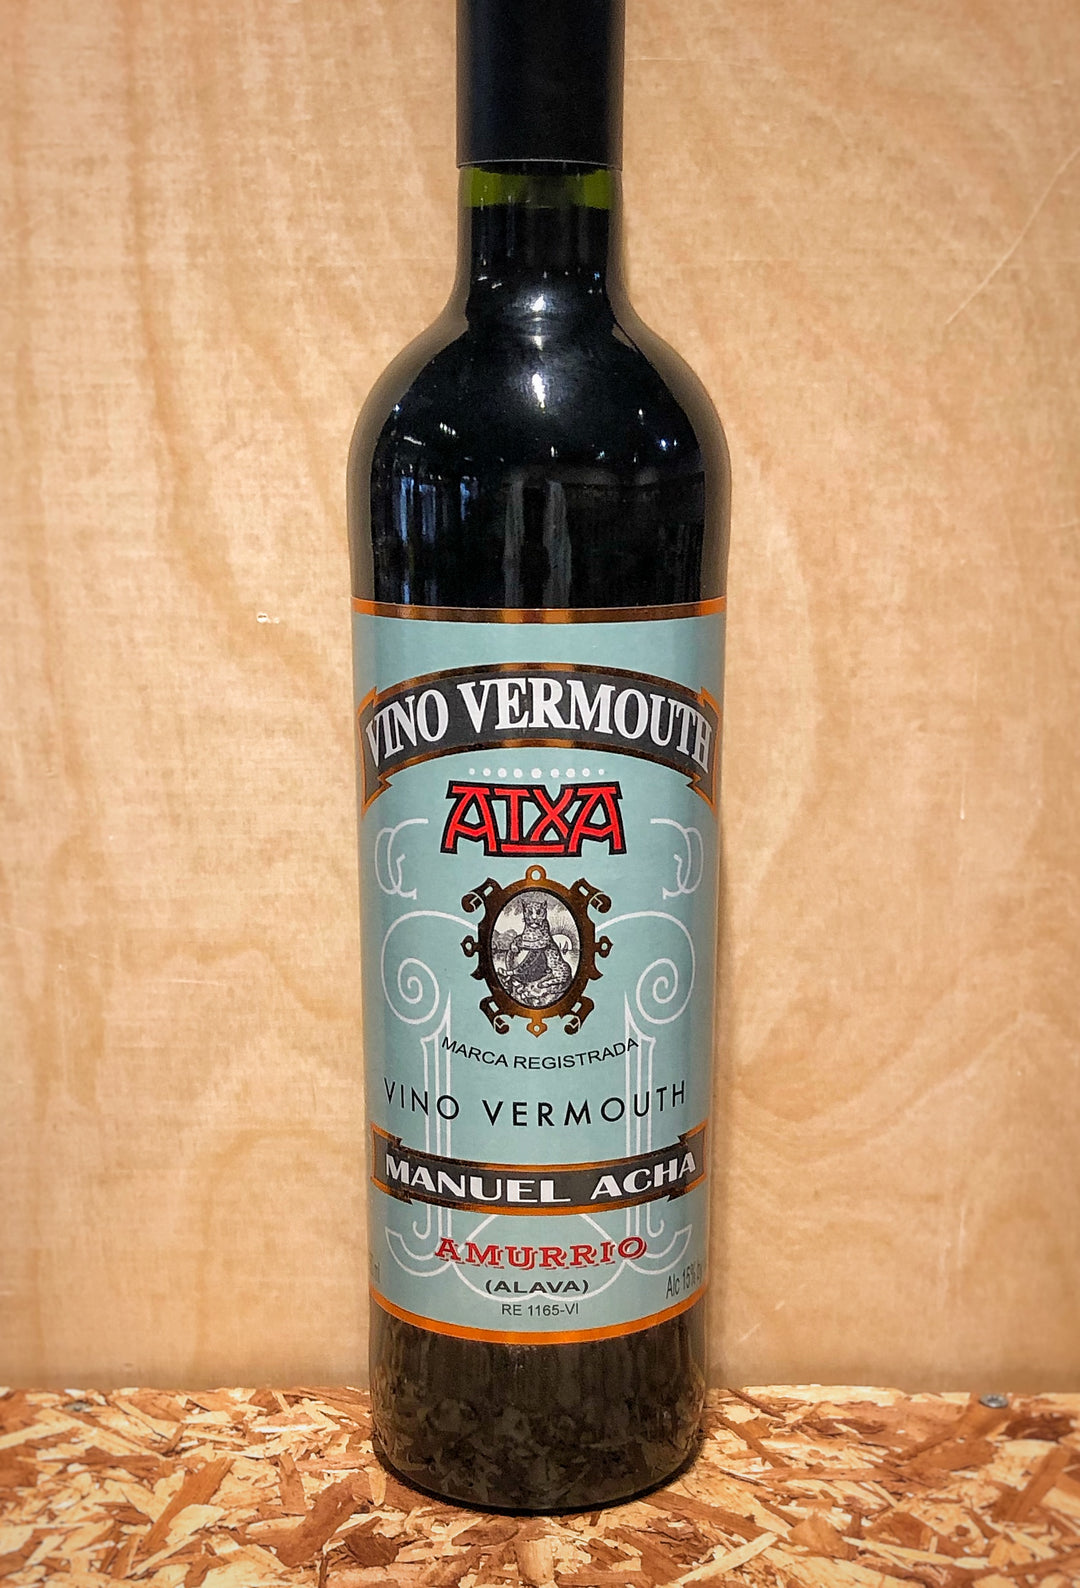 Manuel Acha 'Atxa' Vino Vermouth NV (Alava, Spain)